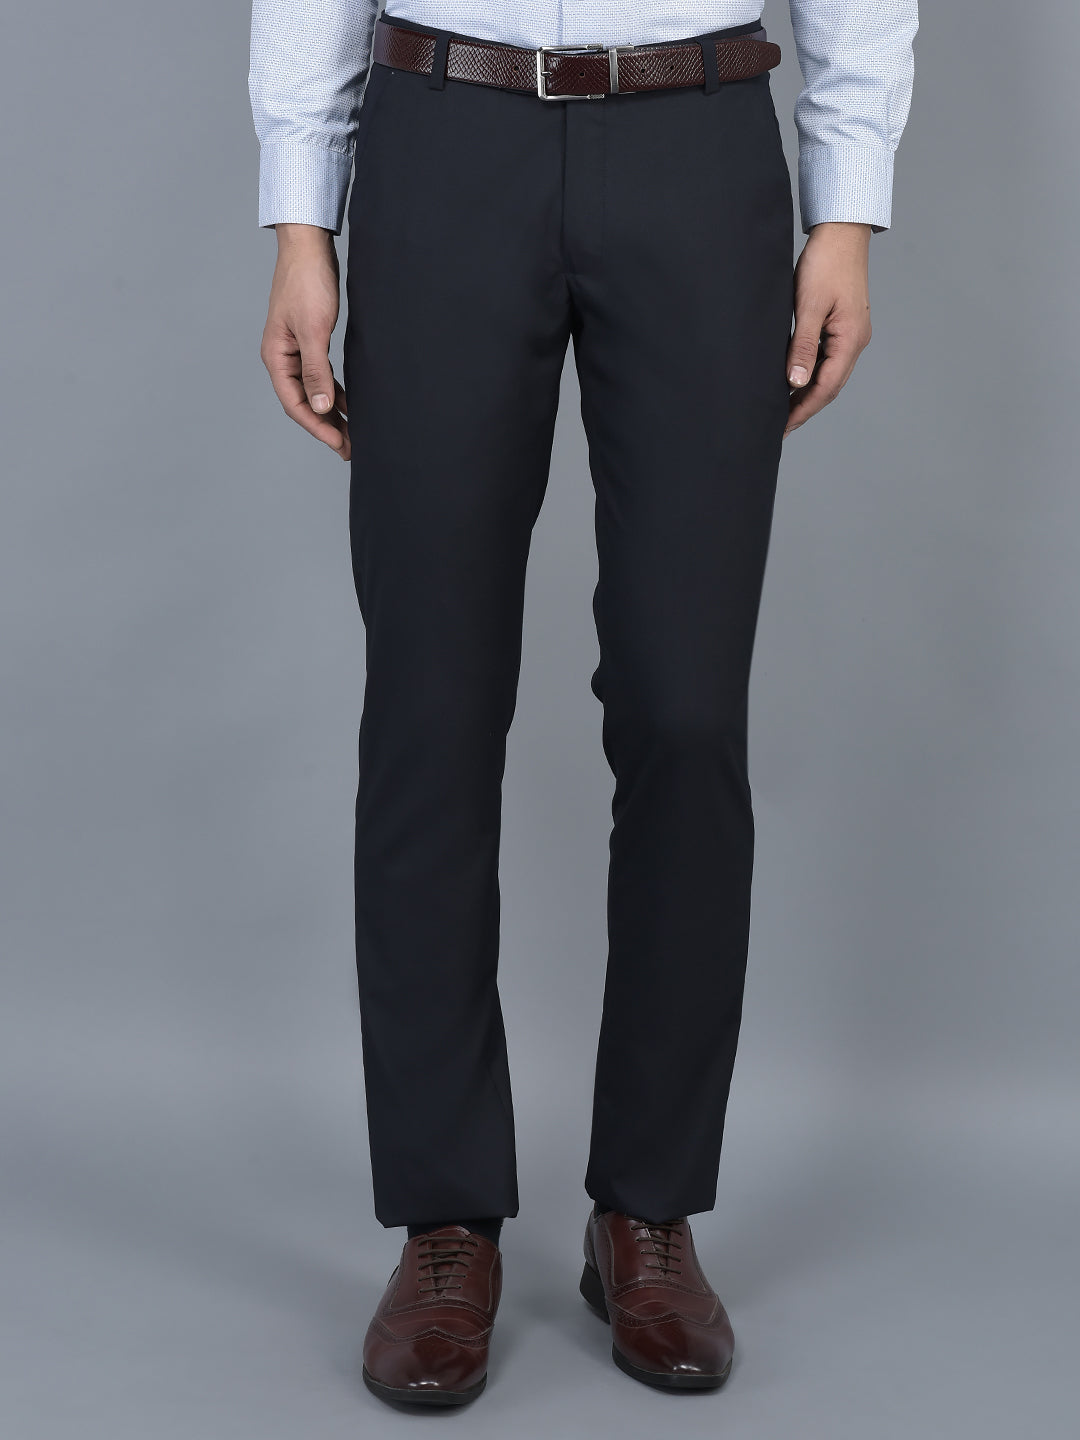 Buy Men Navy Solid Slim Fit Formal Trousers Online  741617  Peter England